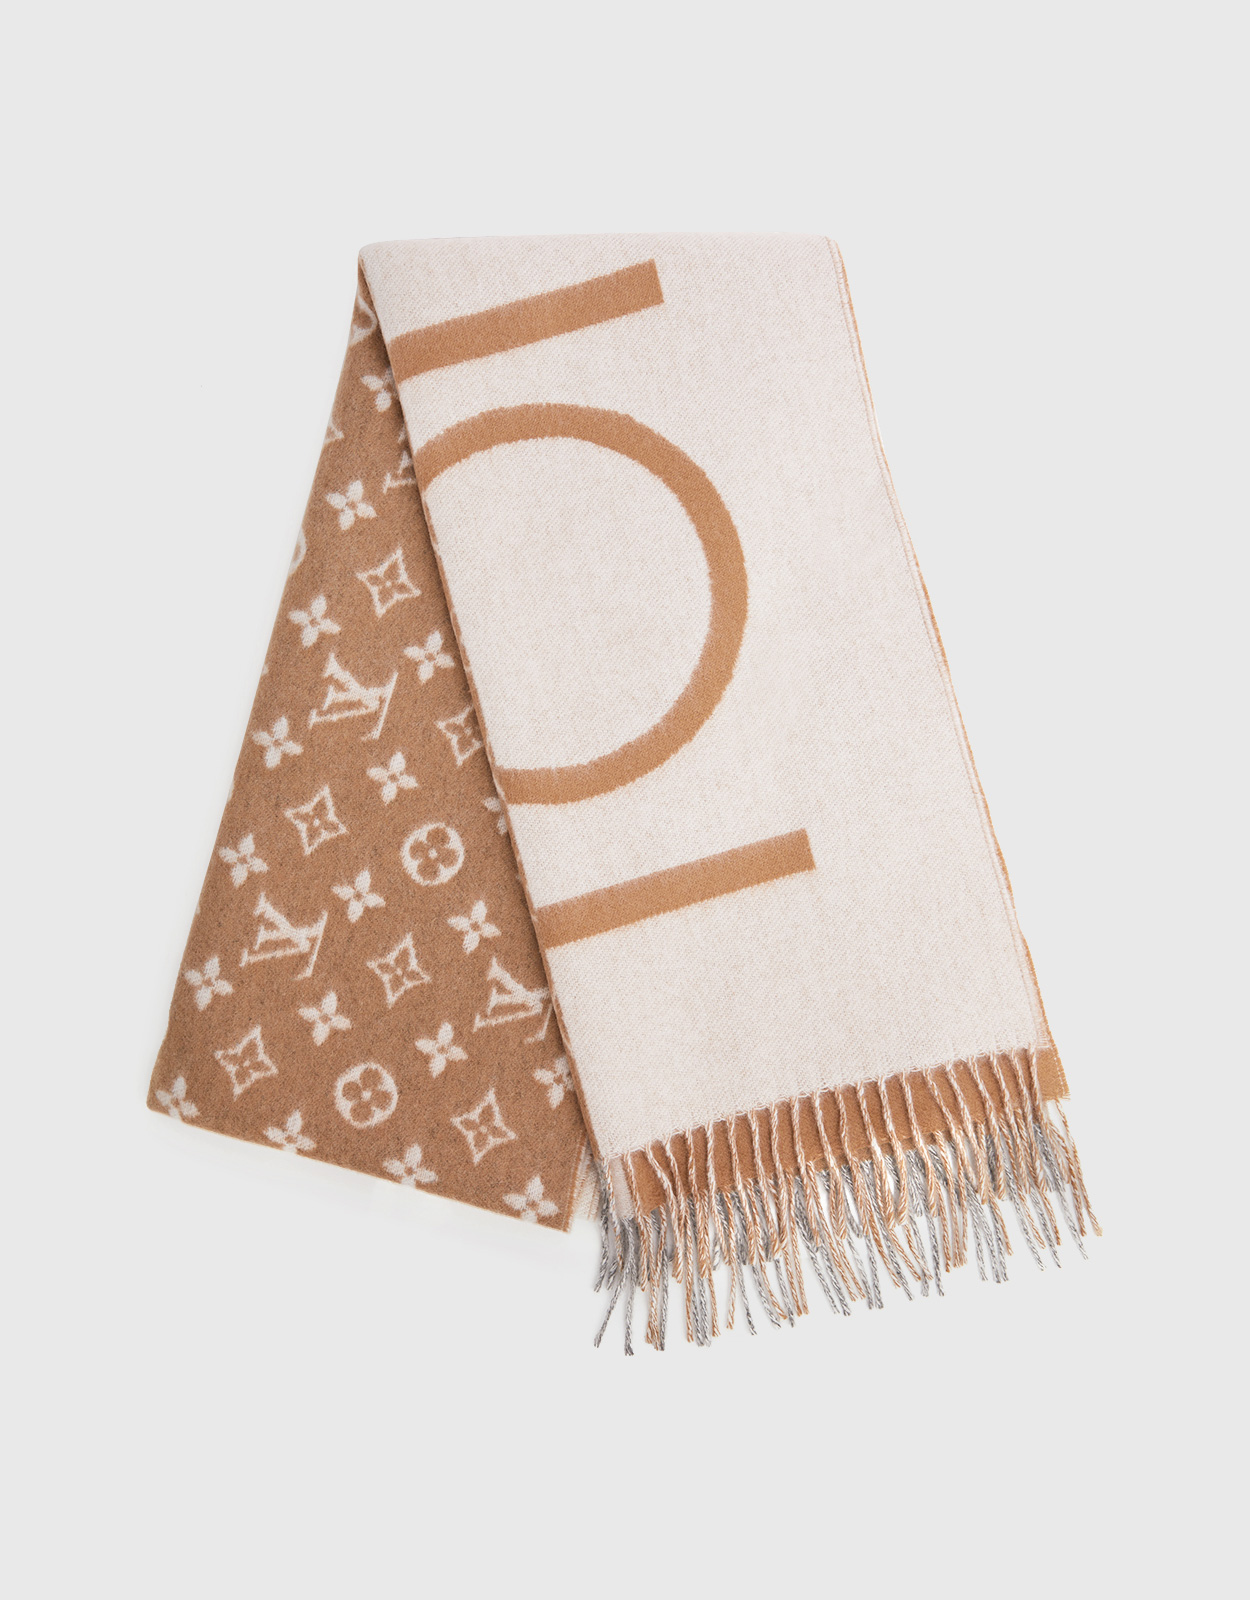 Shop Louis Vuitton MONOGRAM Monogram Wool Cashmere Logo Scarves